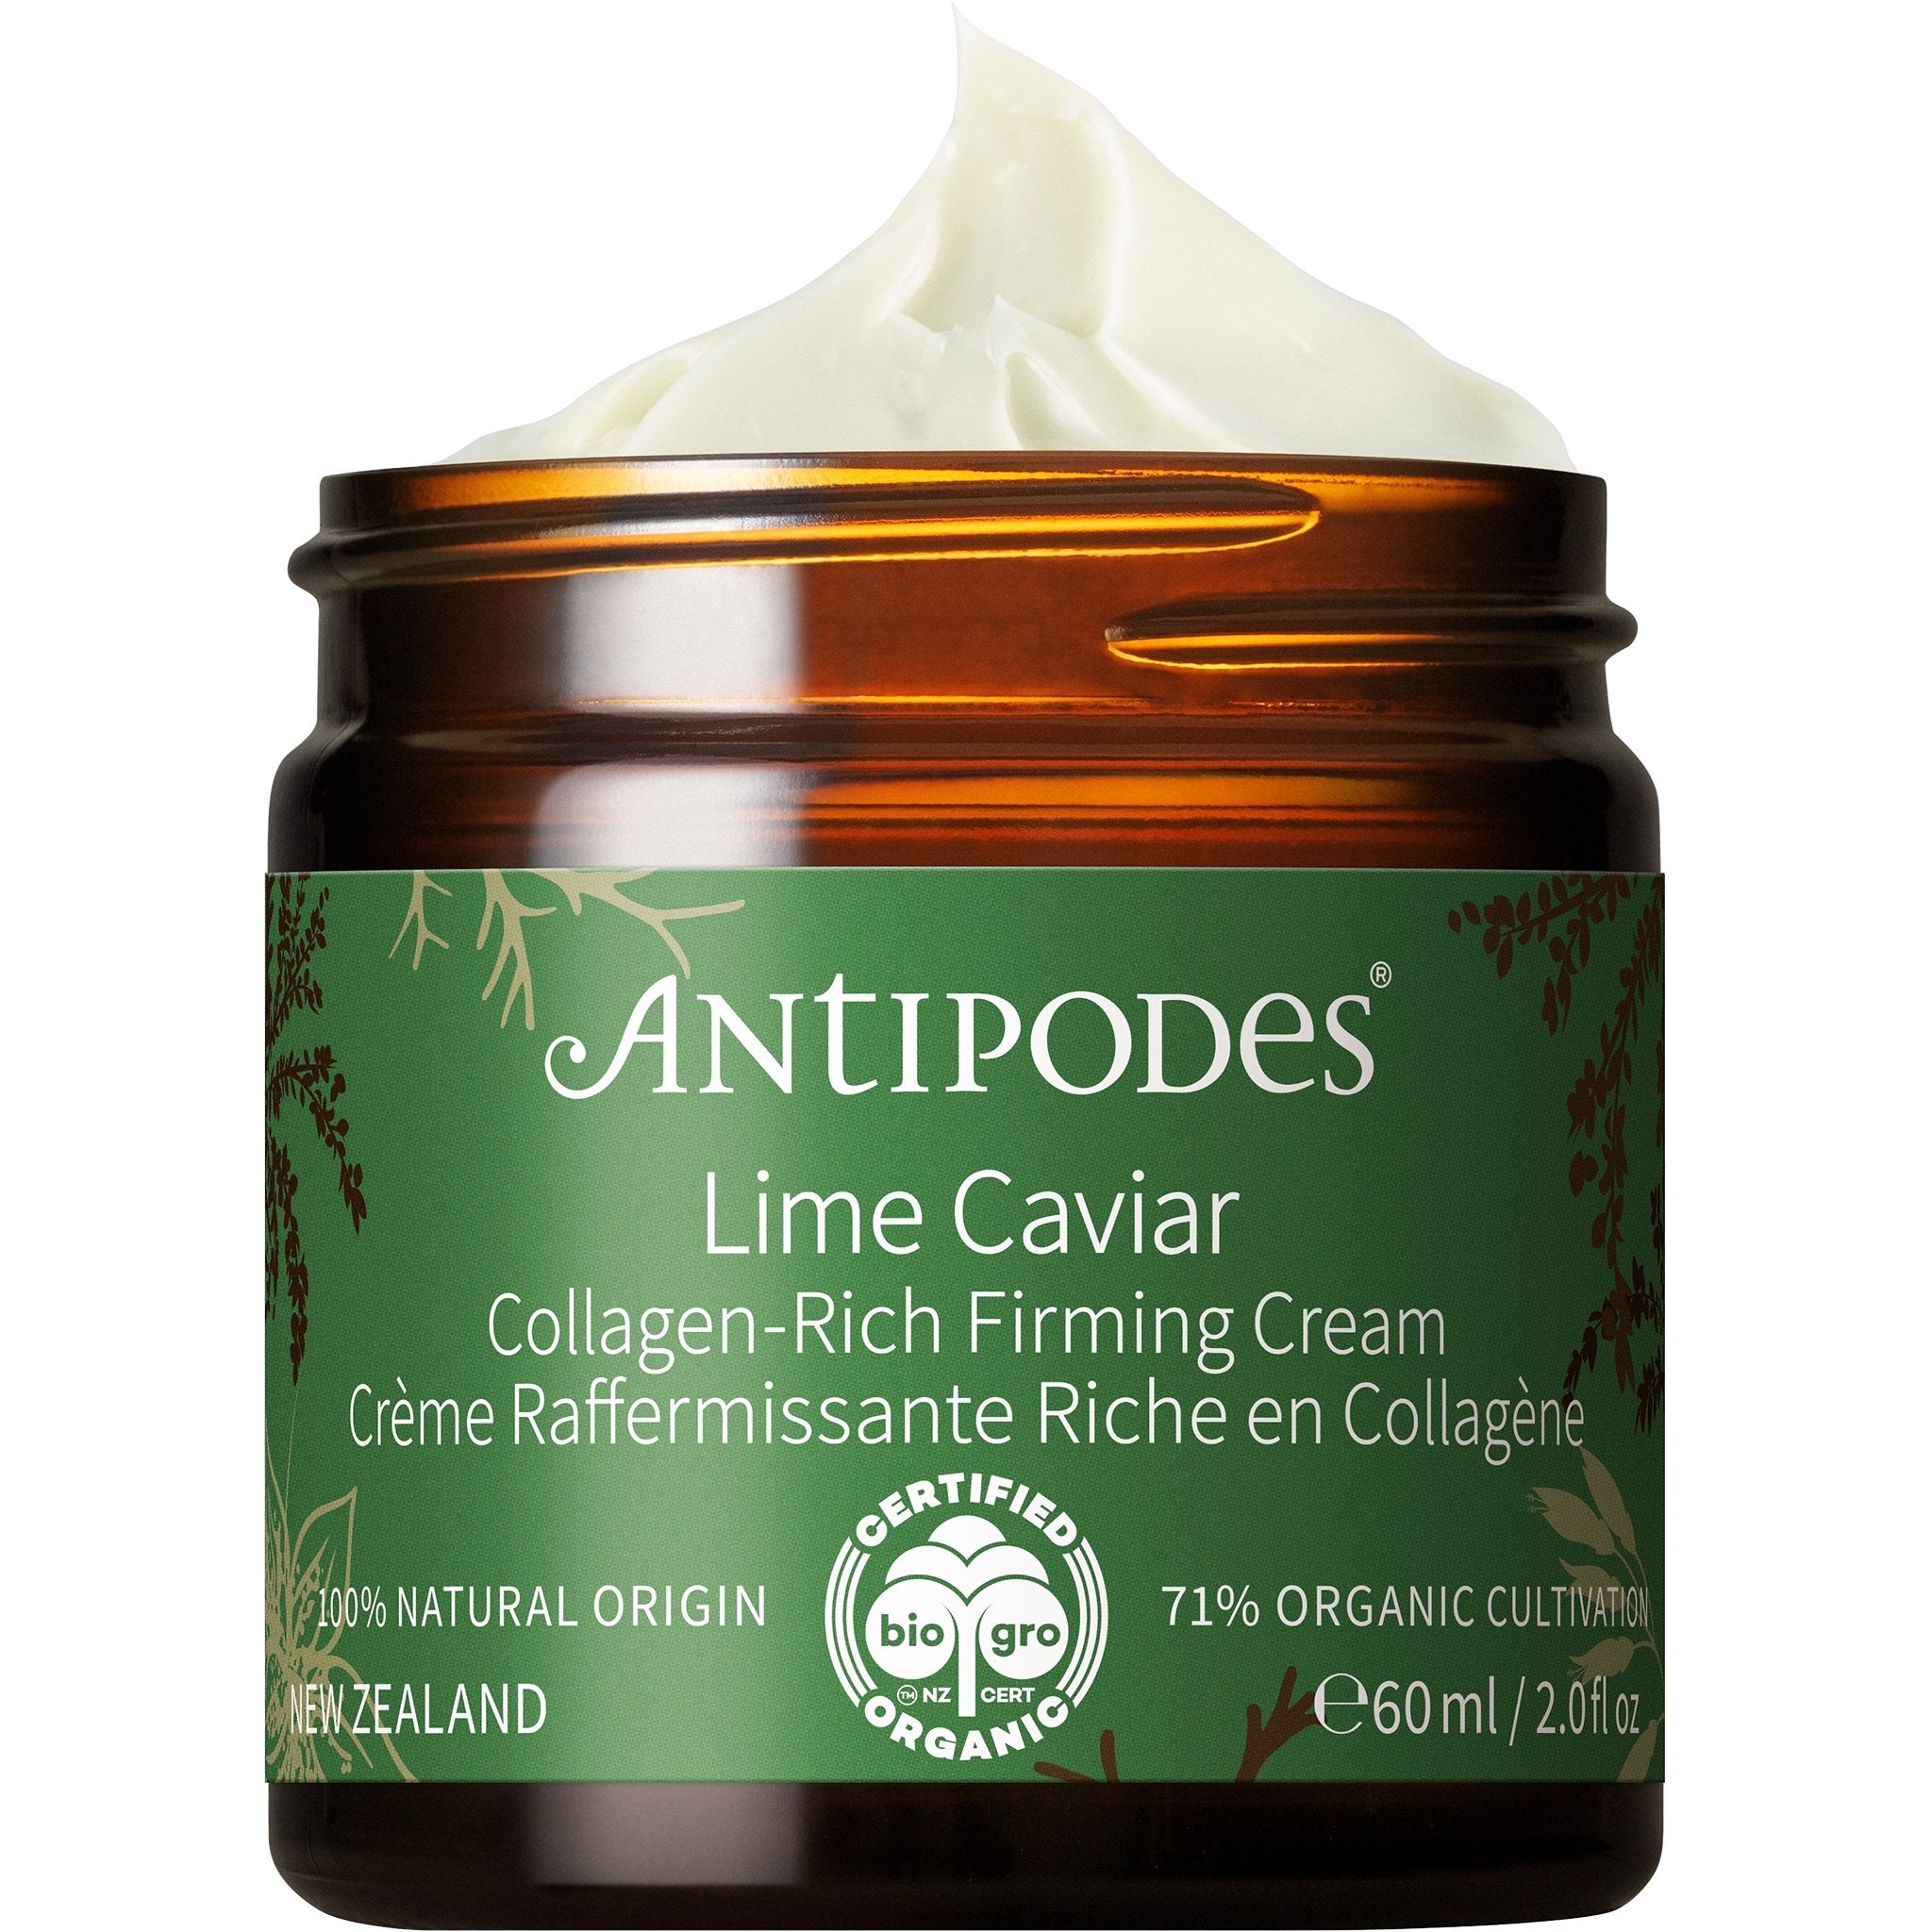 Lime Caviar Collagen-Rich Firming Cream - mypure.co.uk